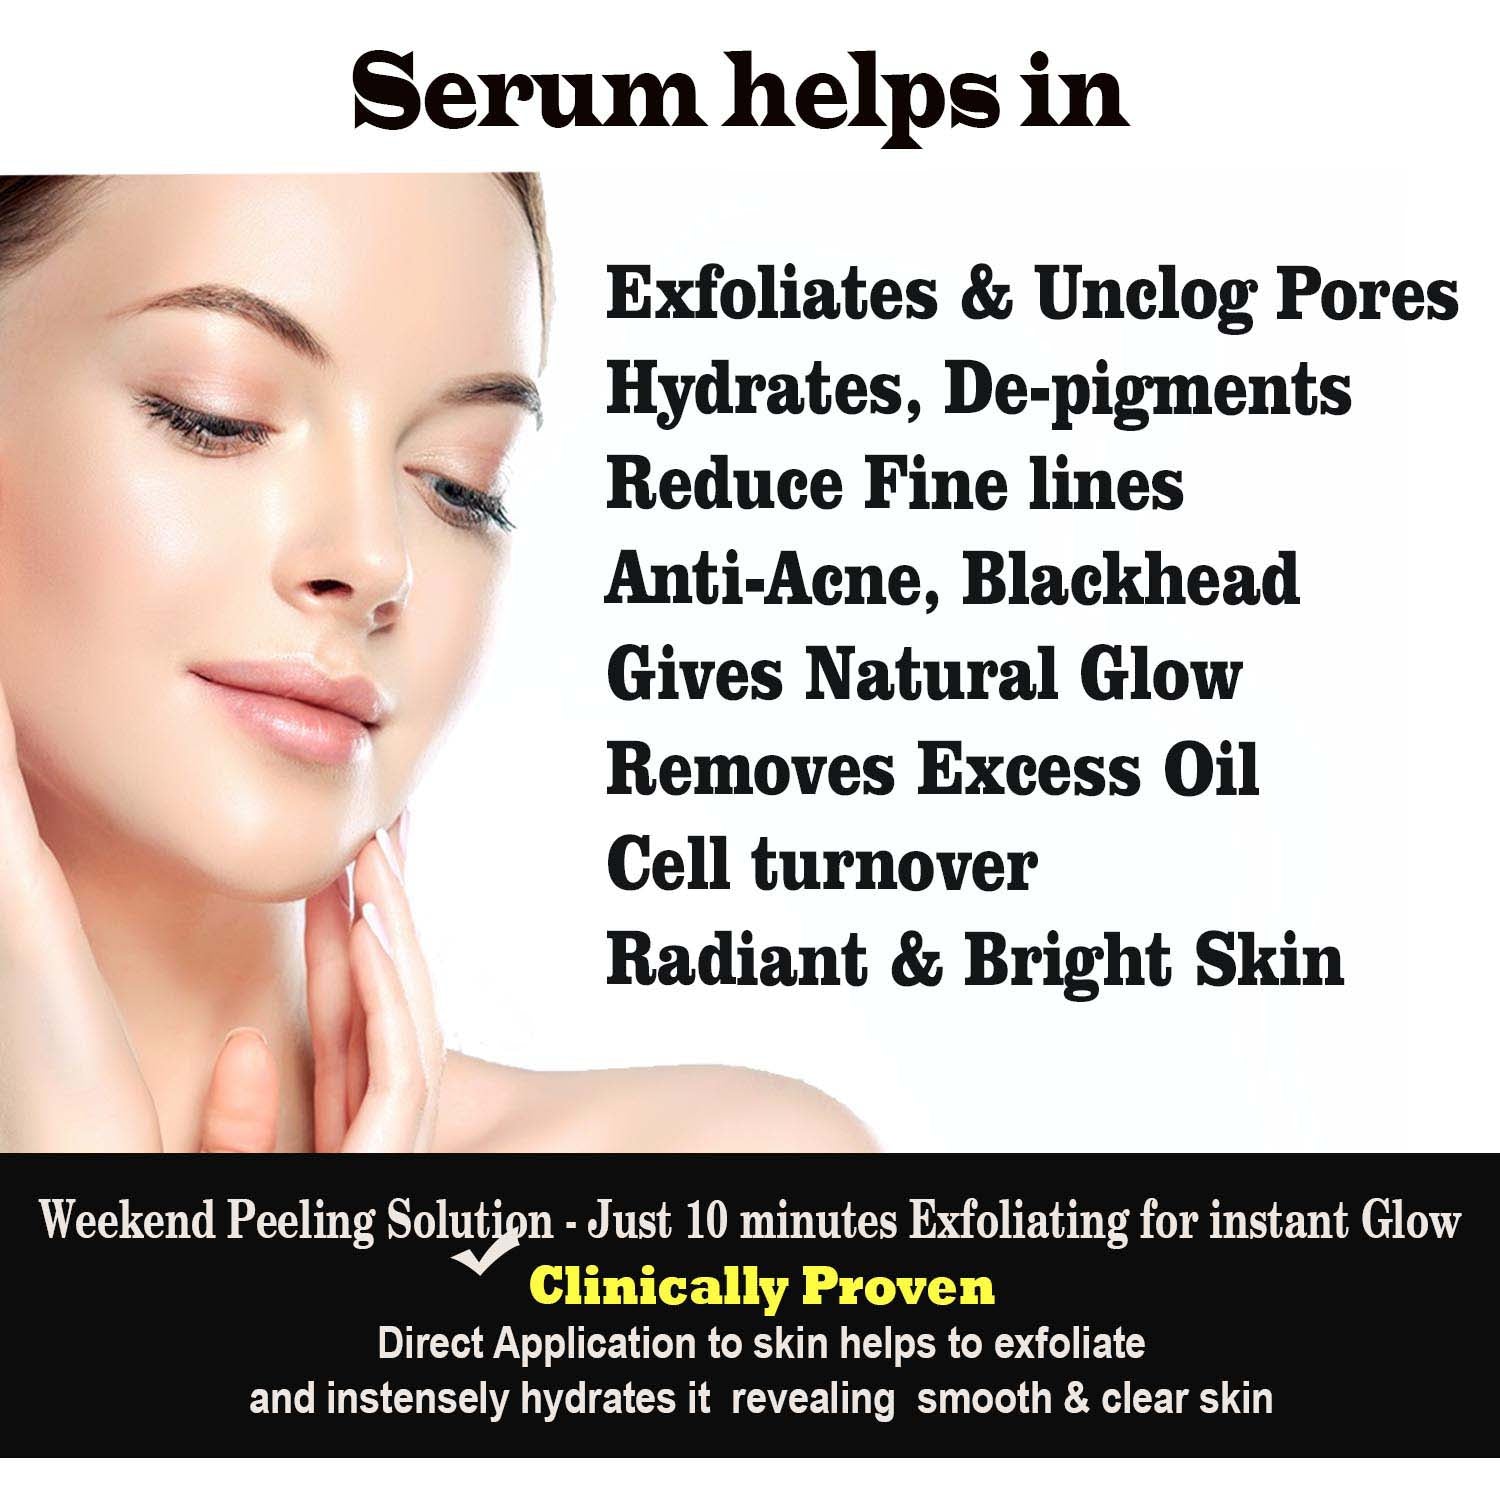 urbaano herbal face serum to reduce fine lines, acne, dark spots, tan, excess oil